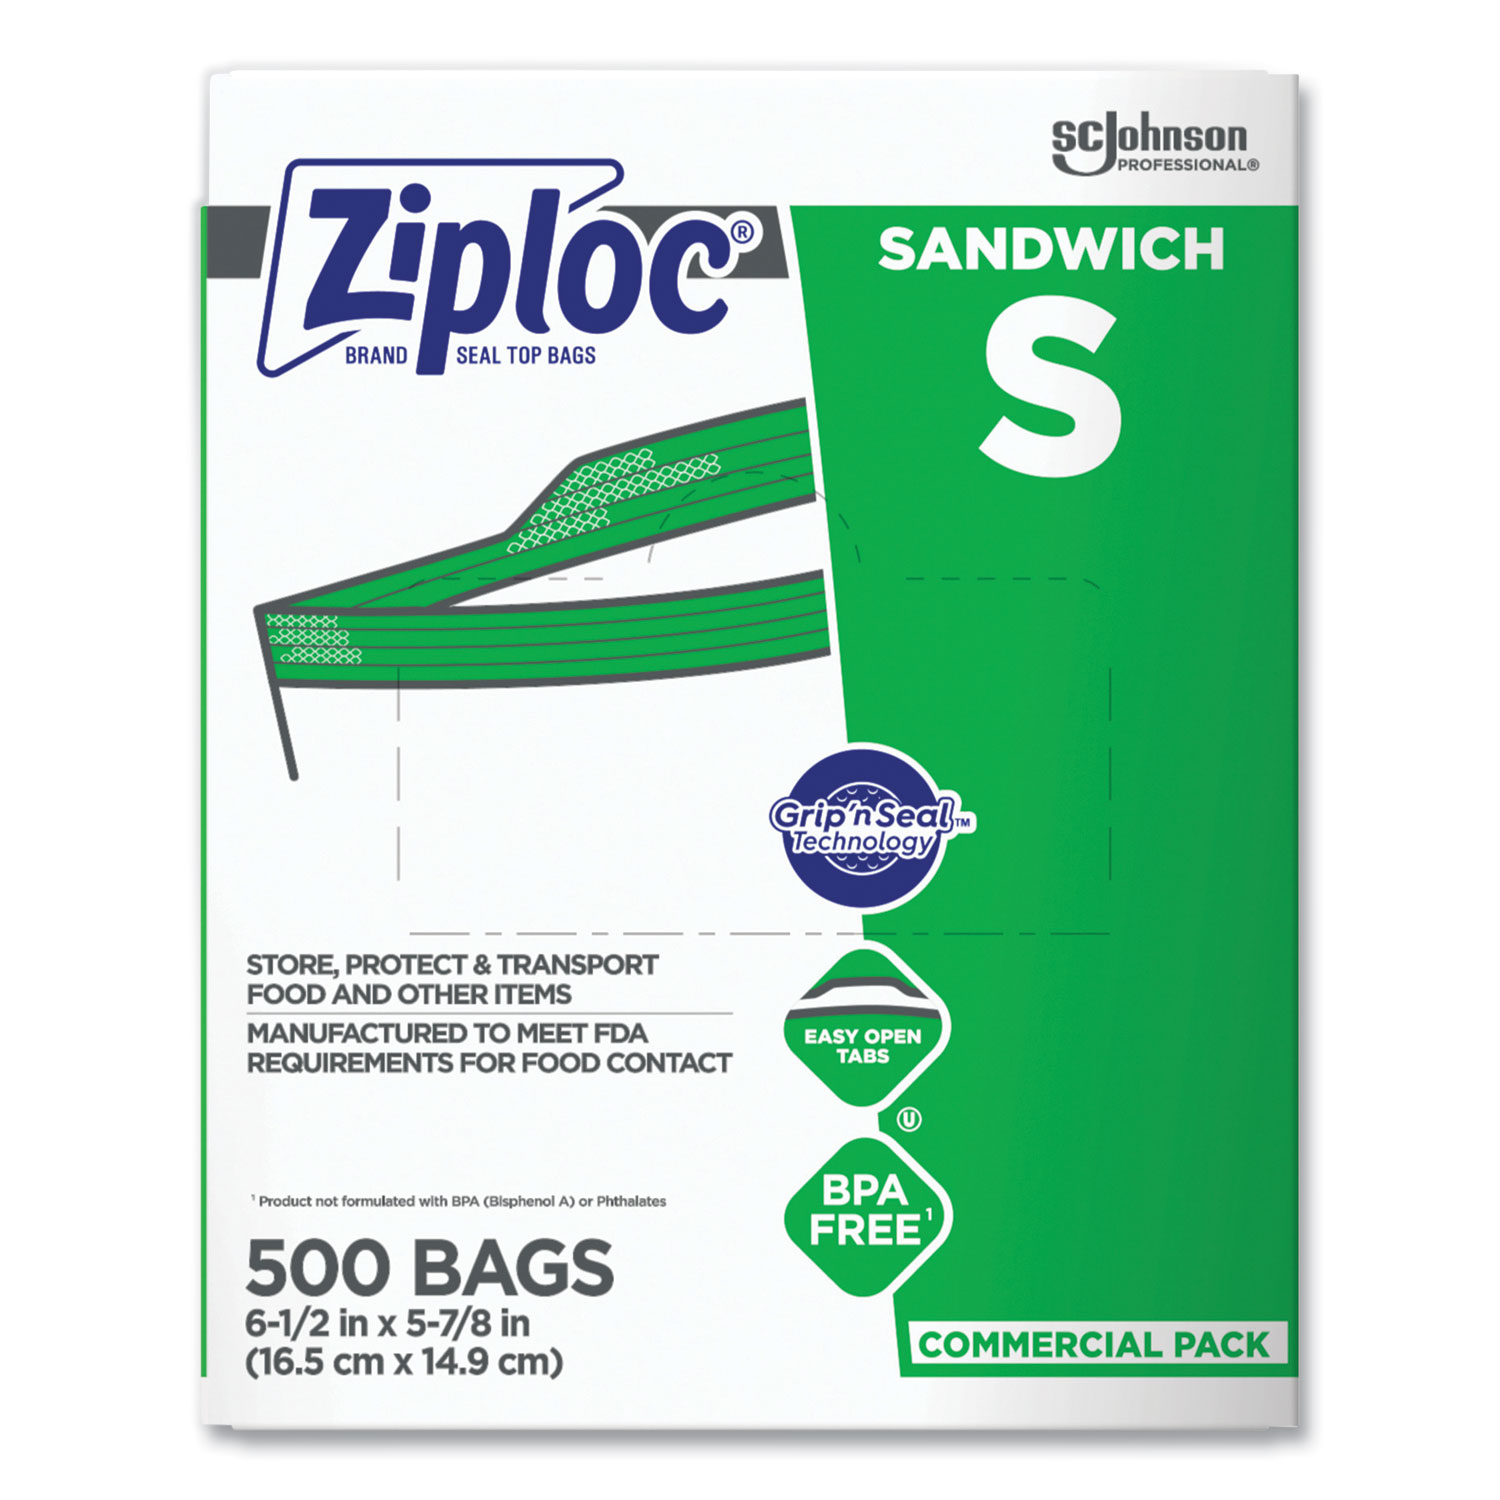 Ziploc Resealable Sandwich Bags